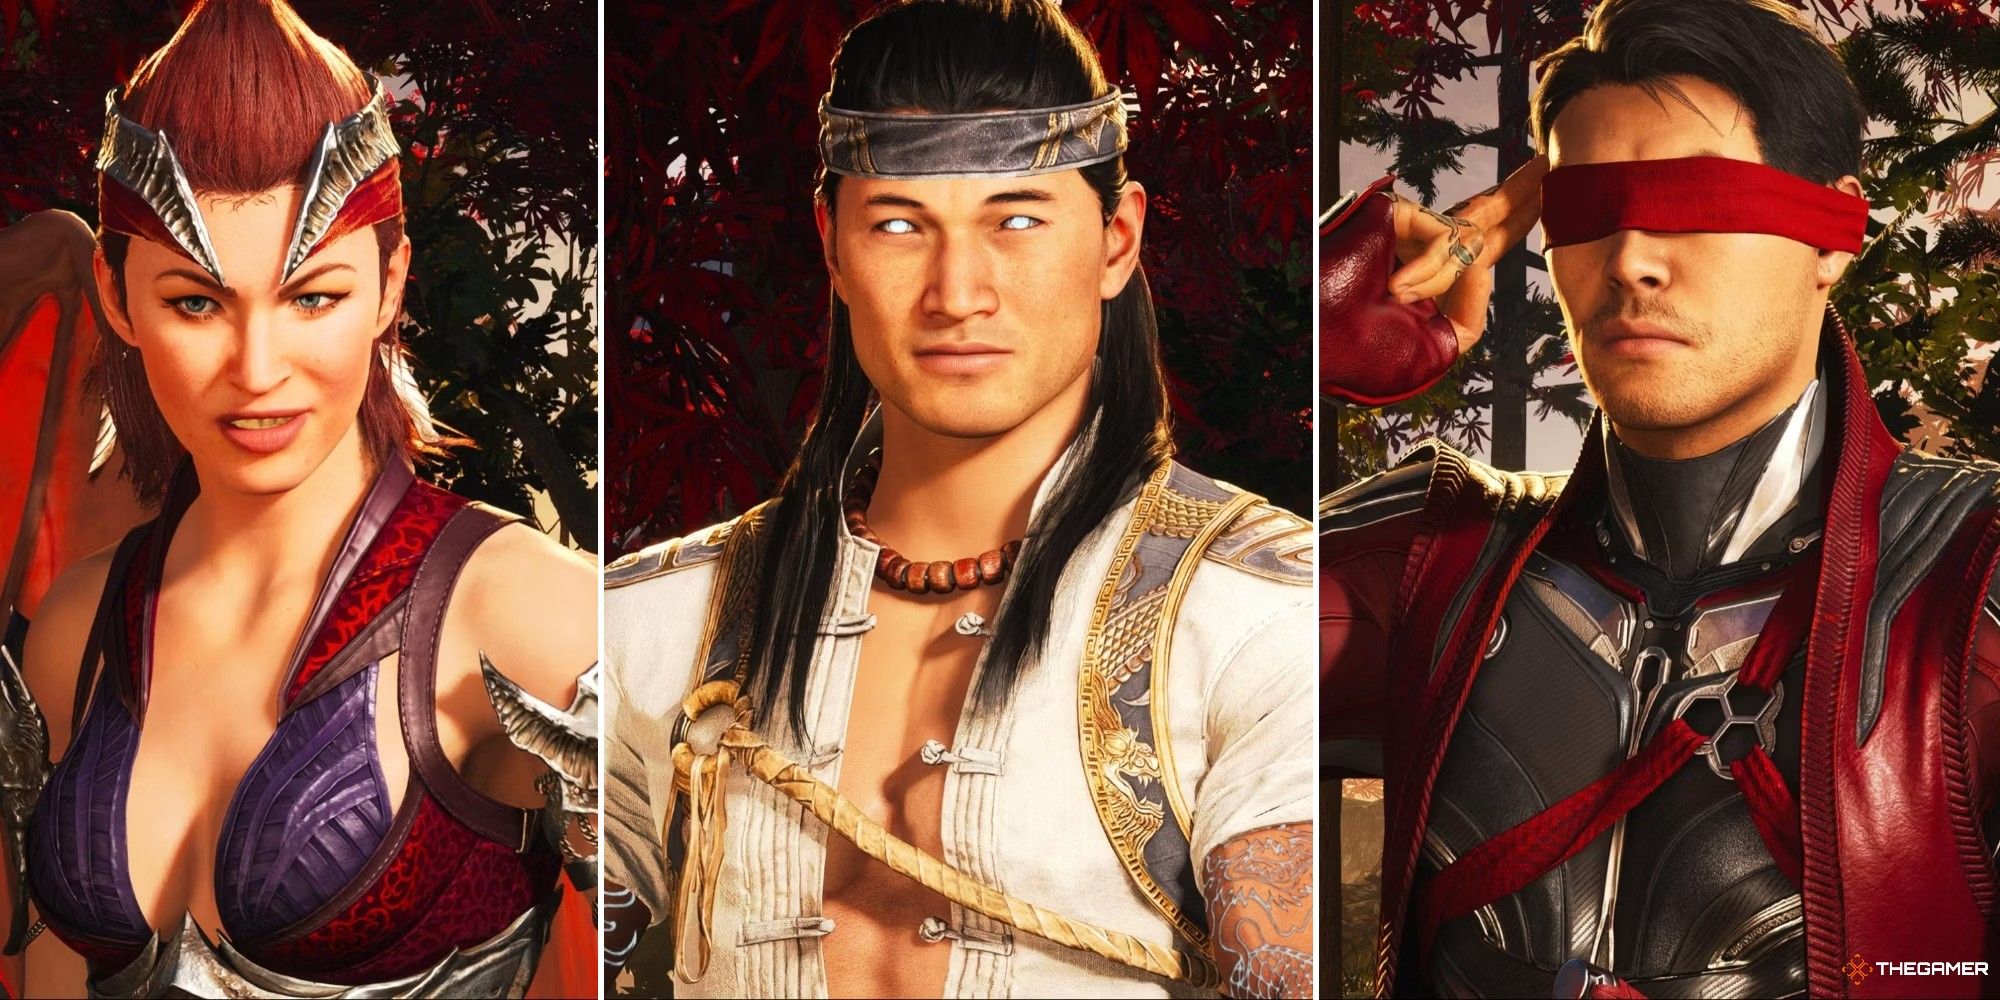 Mortal Kombat 1 Voice Actors: Who is in the MK1 Cast? - GameRevolution